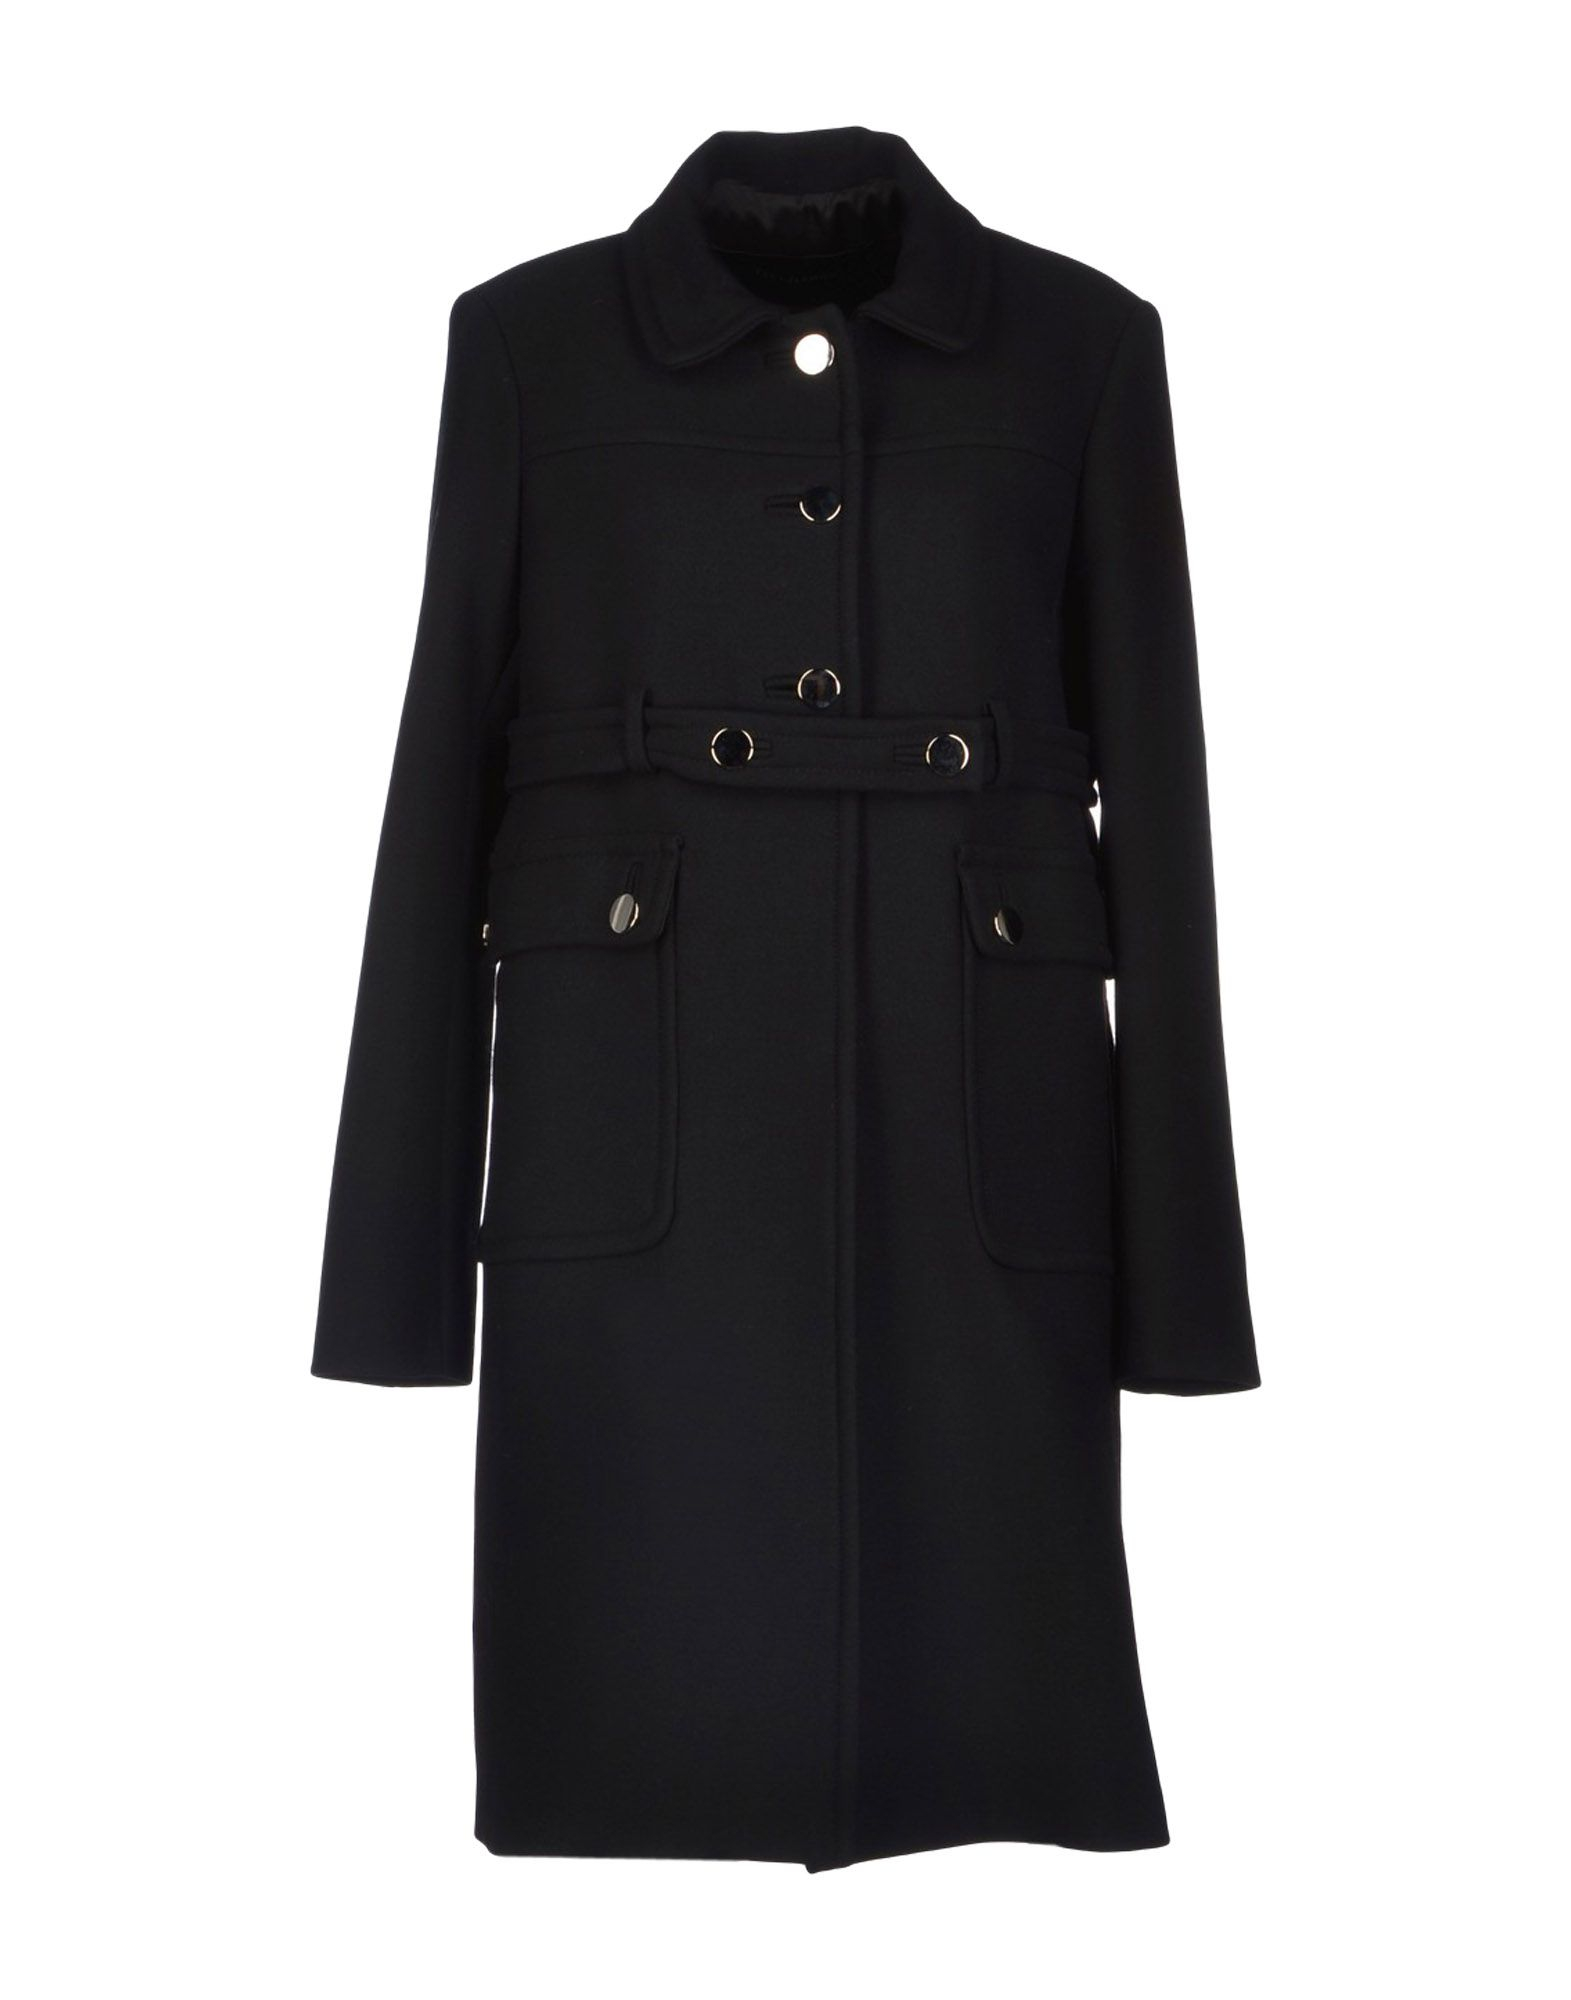 Tara jarmon Coat in Black | Lyst